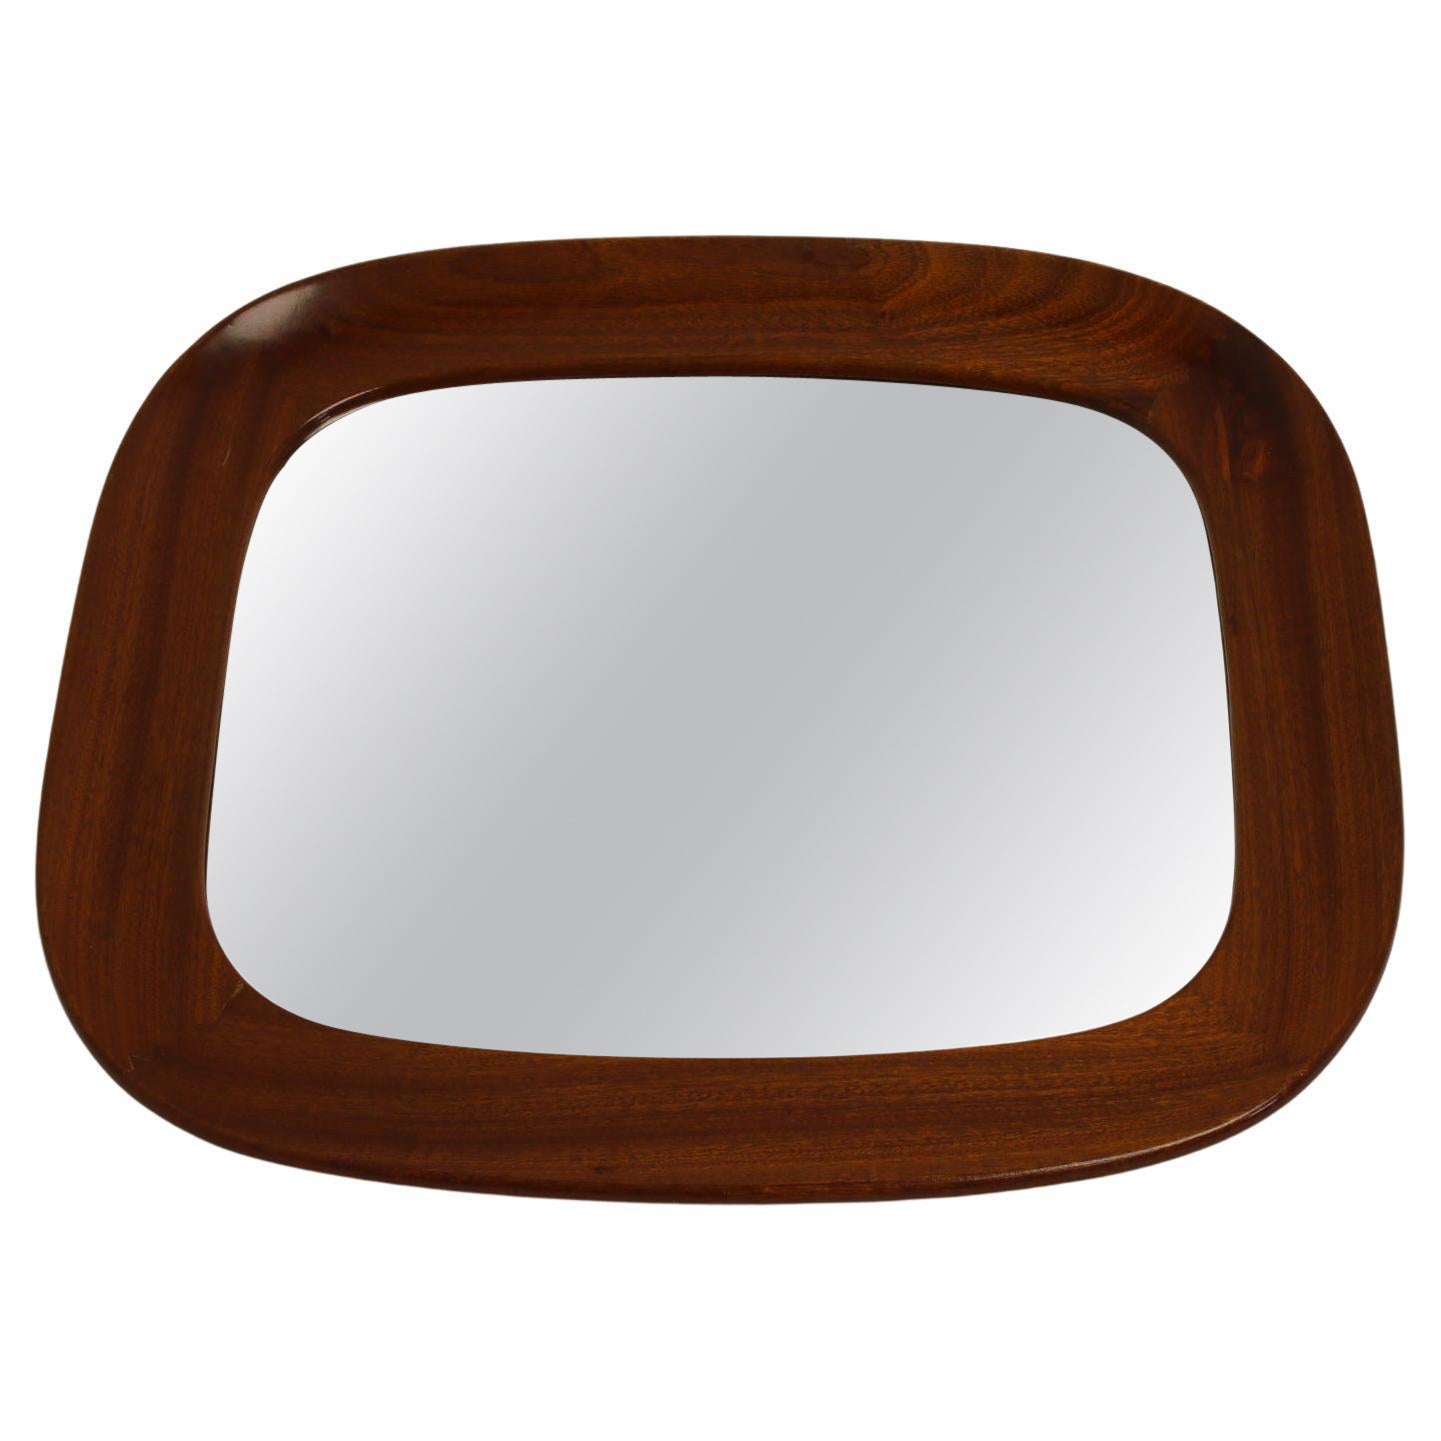 Vintage Mirror with Wide Wooden Rim